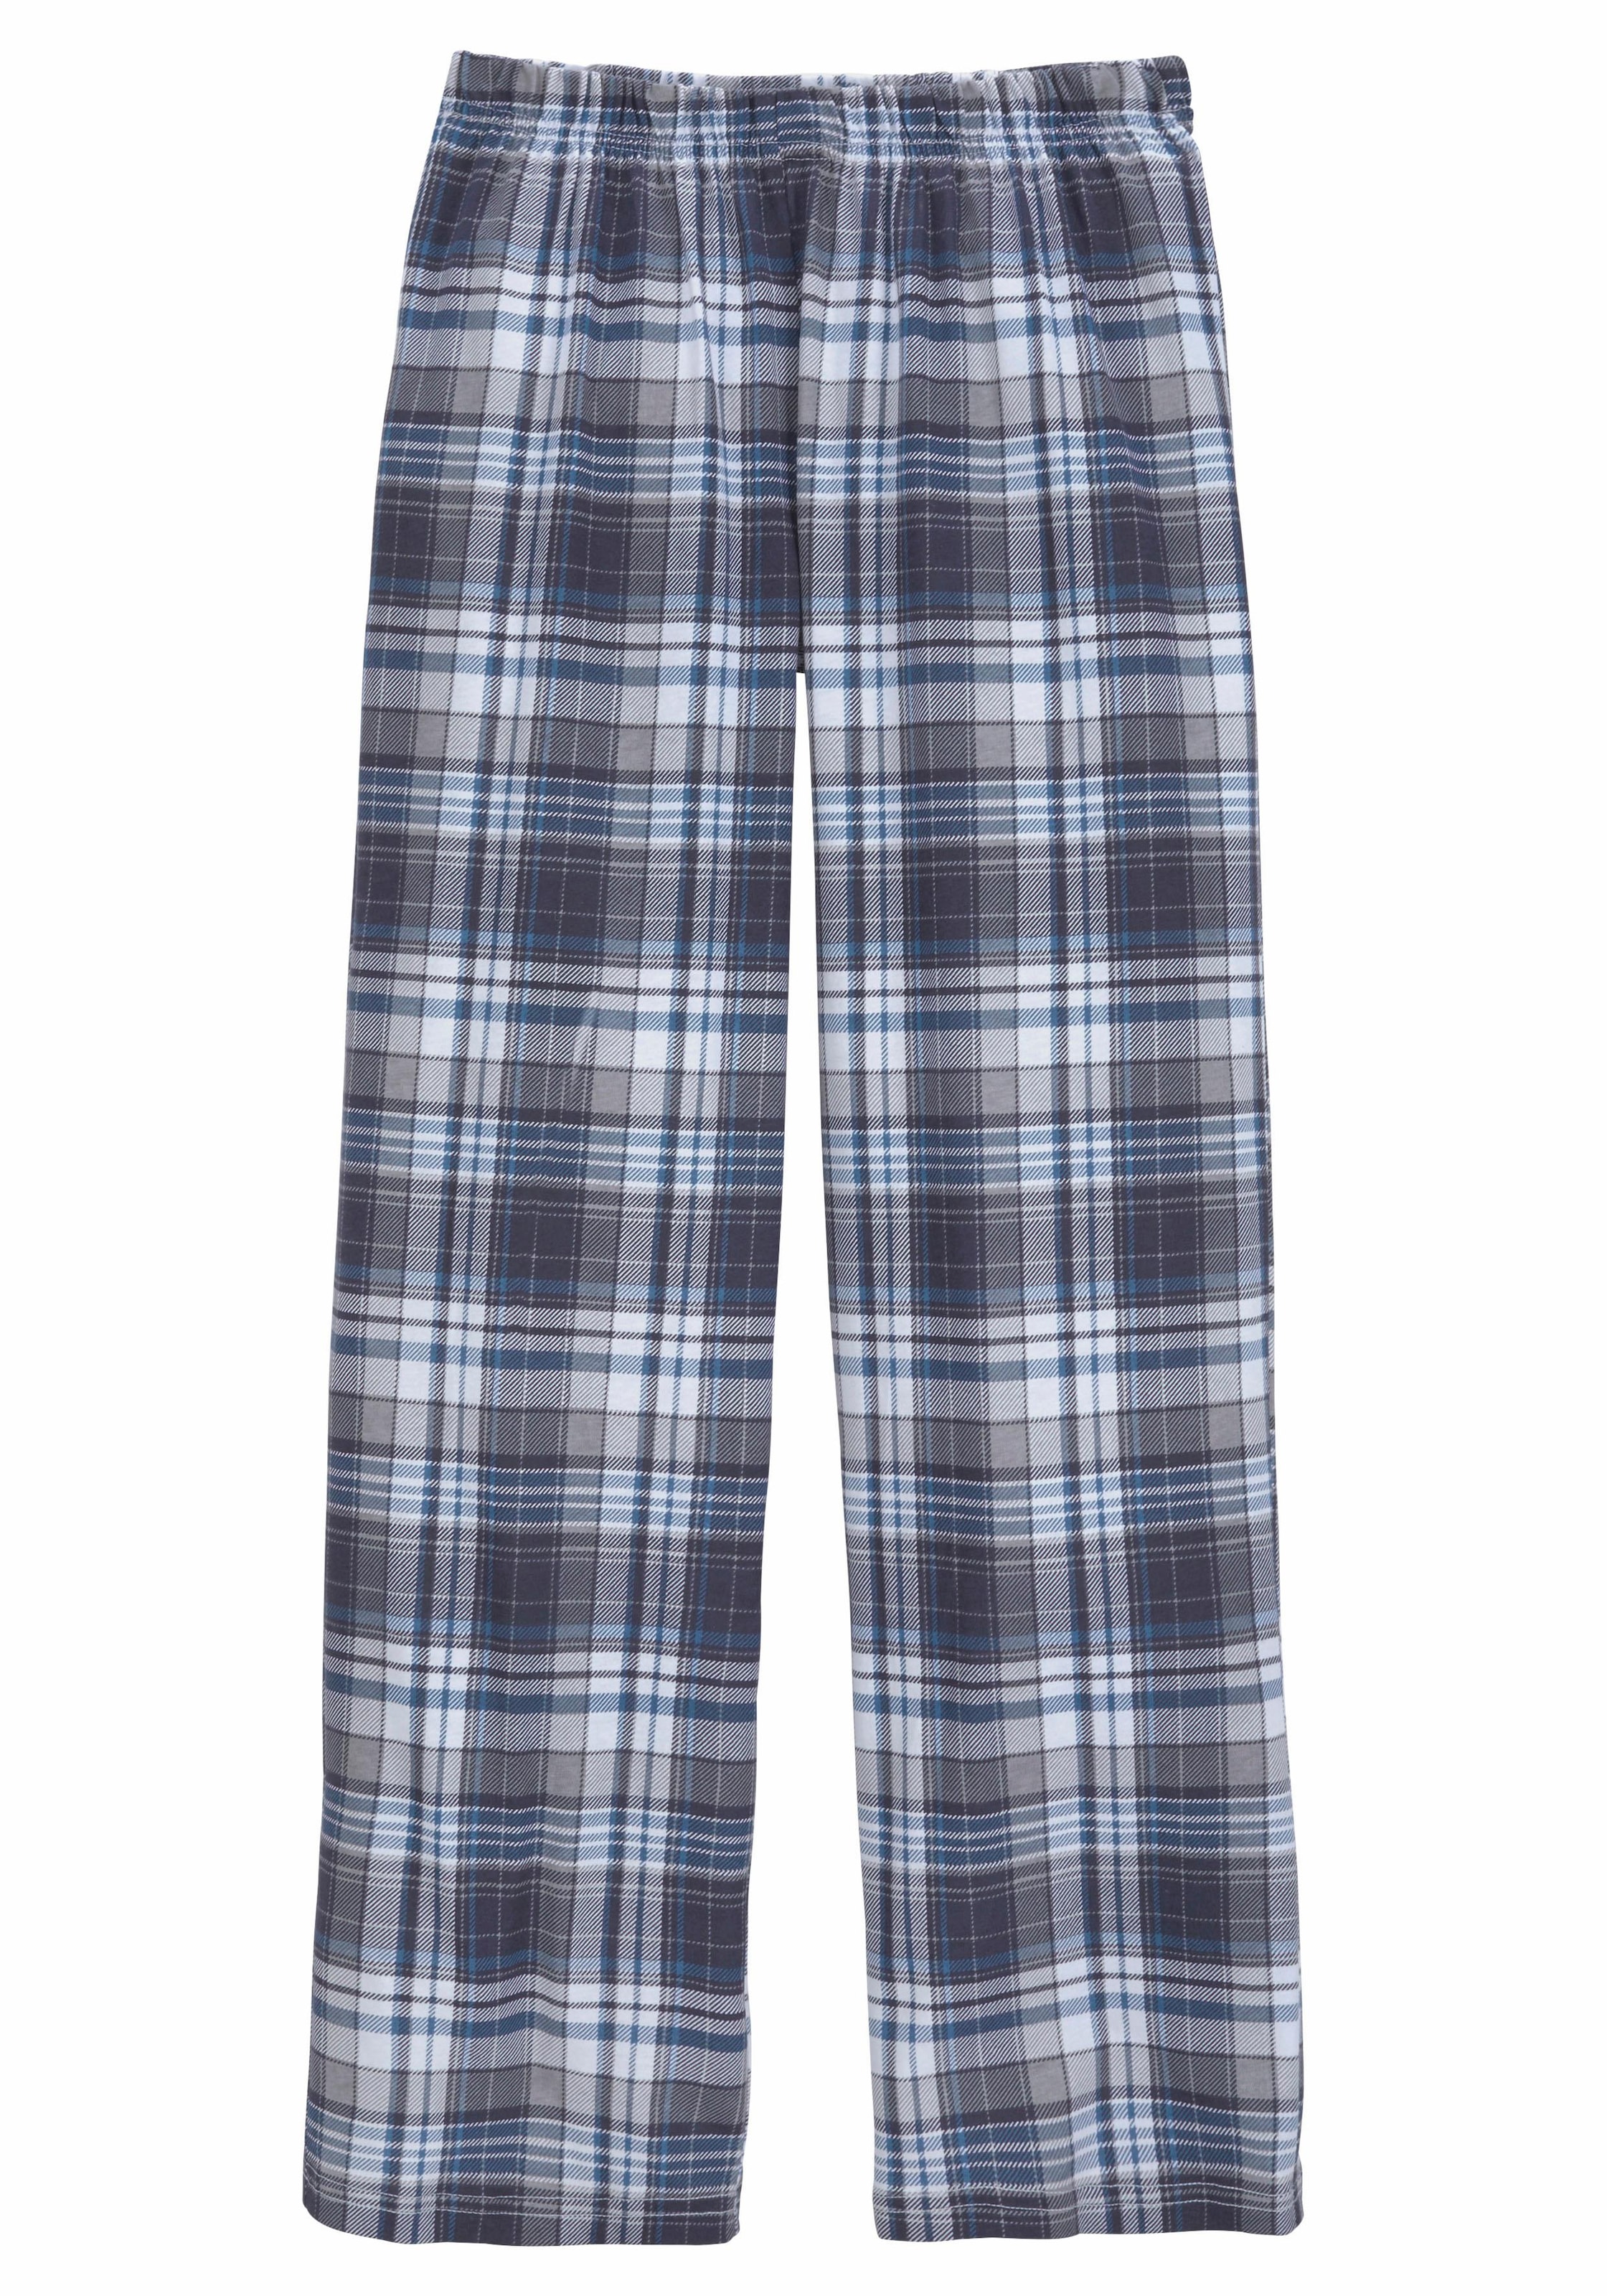 le jogger® Pyjama, (Packung, 4 tlg., 2 Stück), in langer Form, Hose 1x uni und 1x kariert